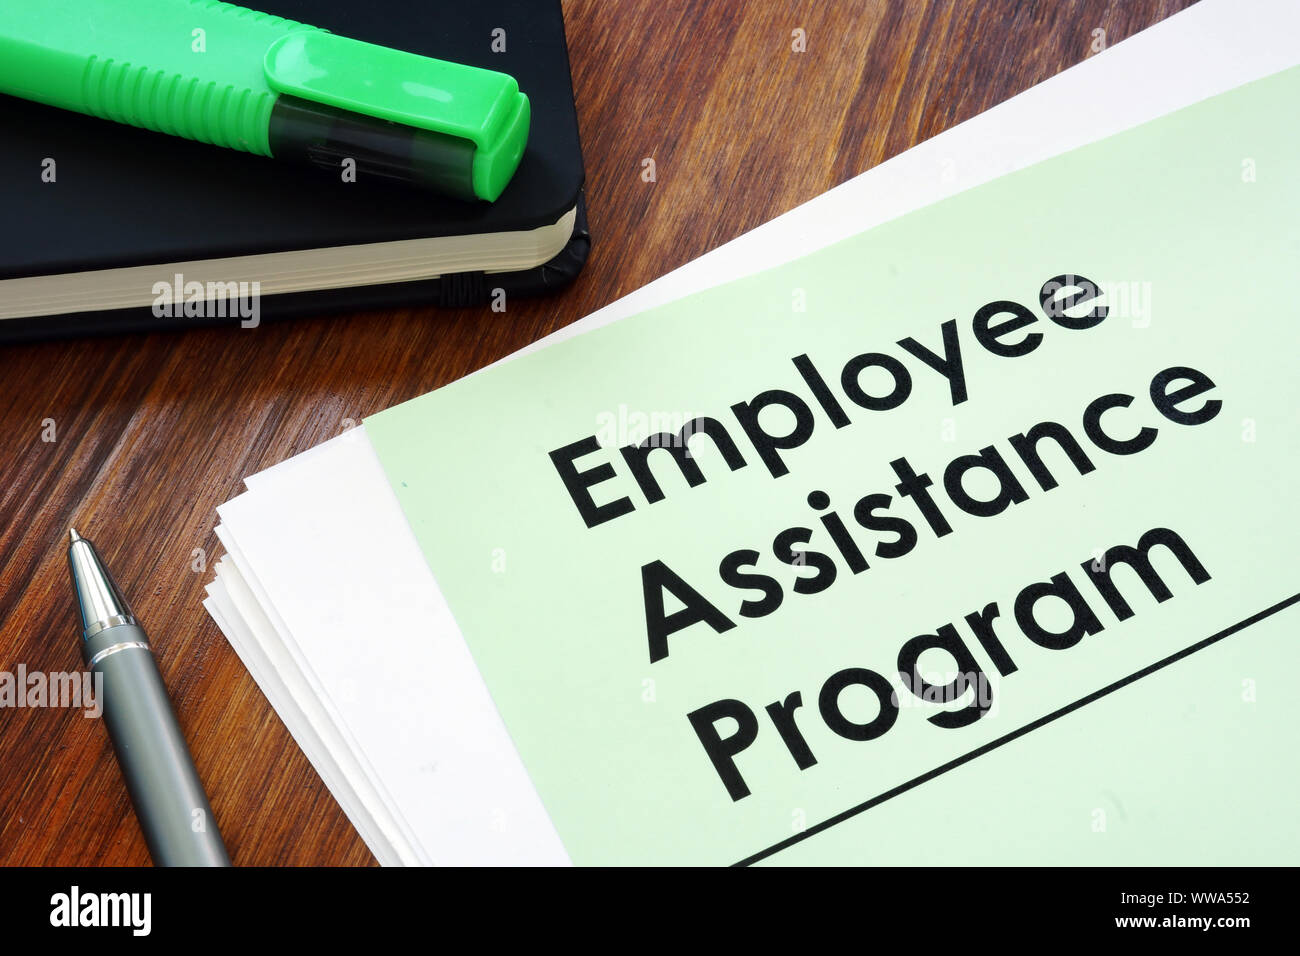 Employee assistance program EAP - benefit program on the desk. Stock Photo